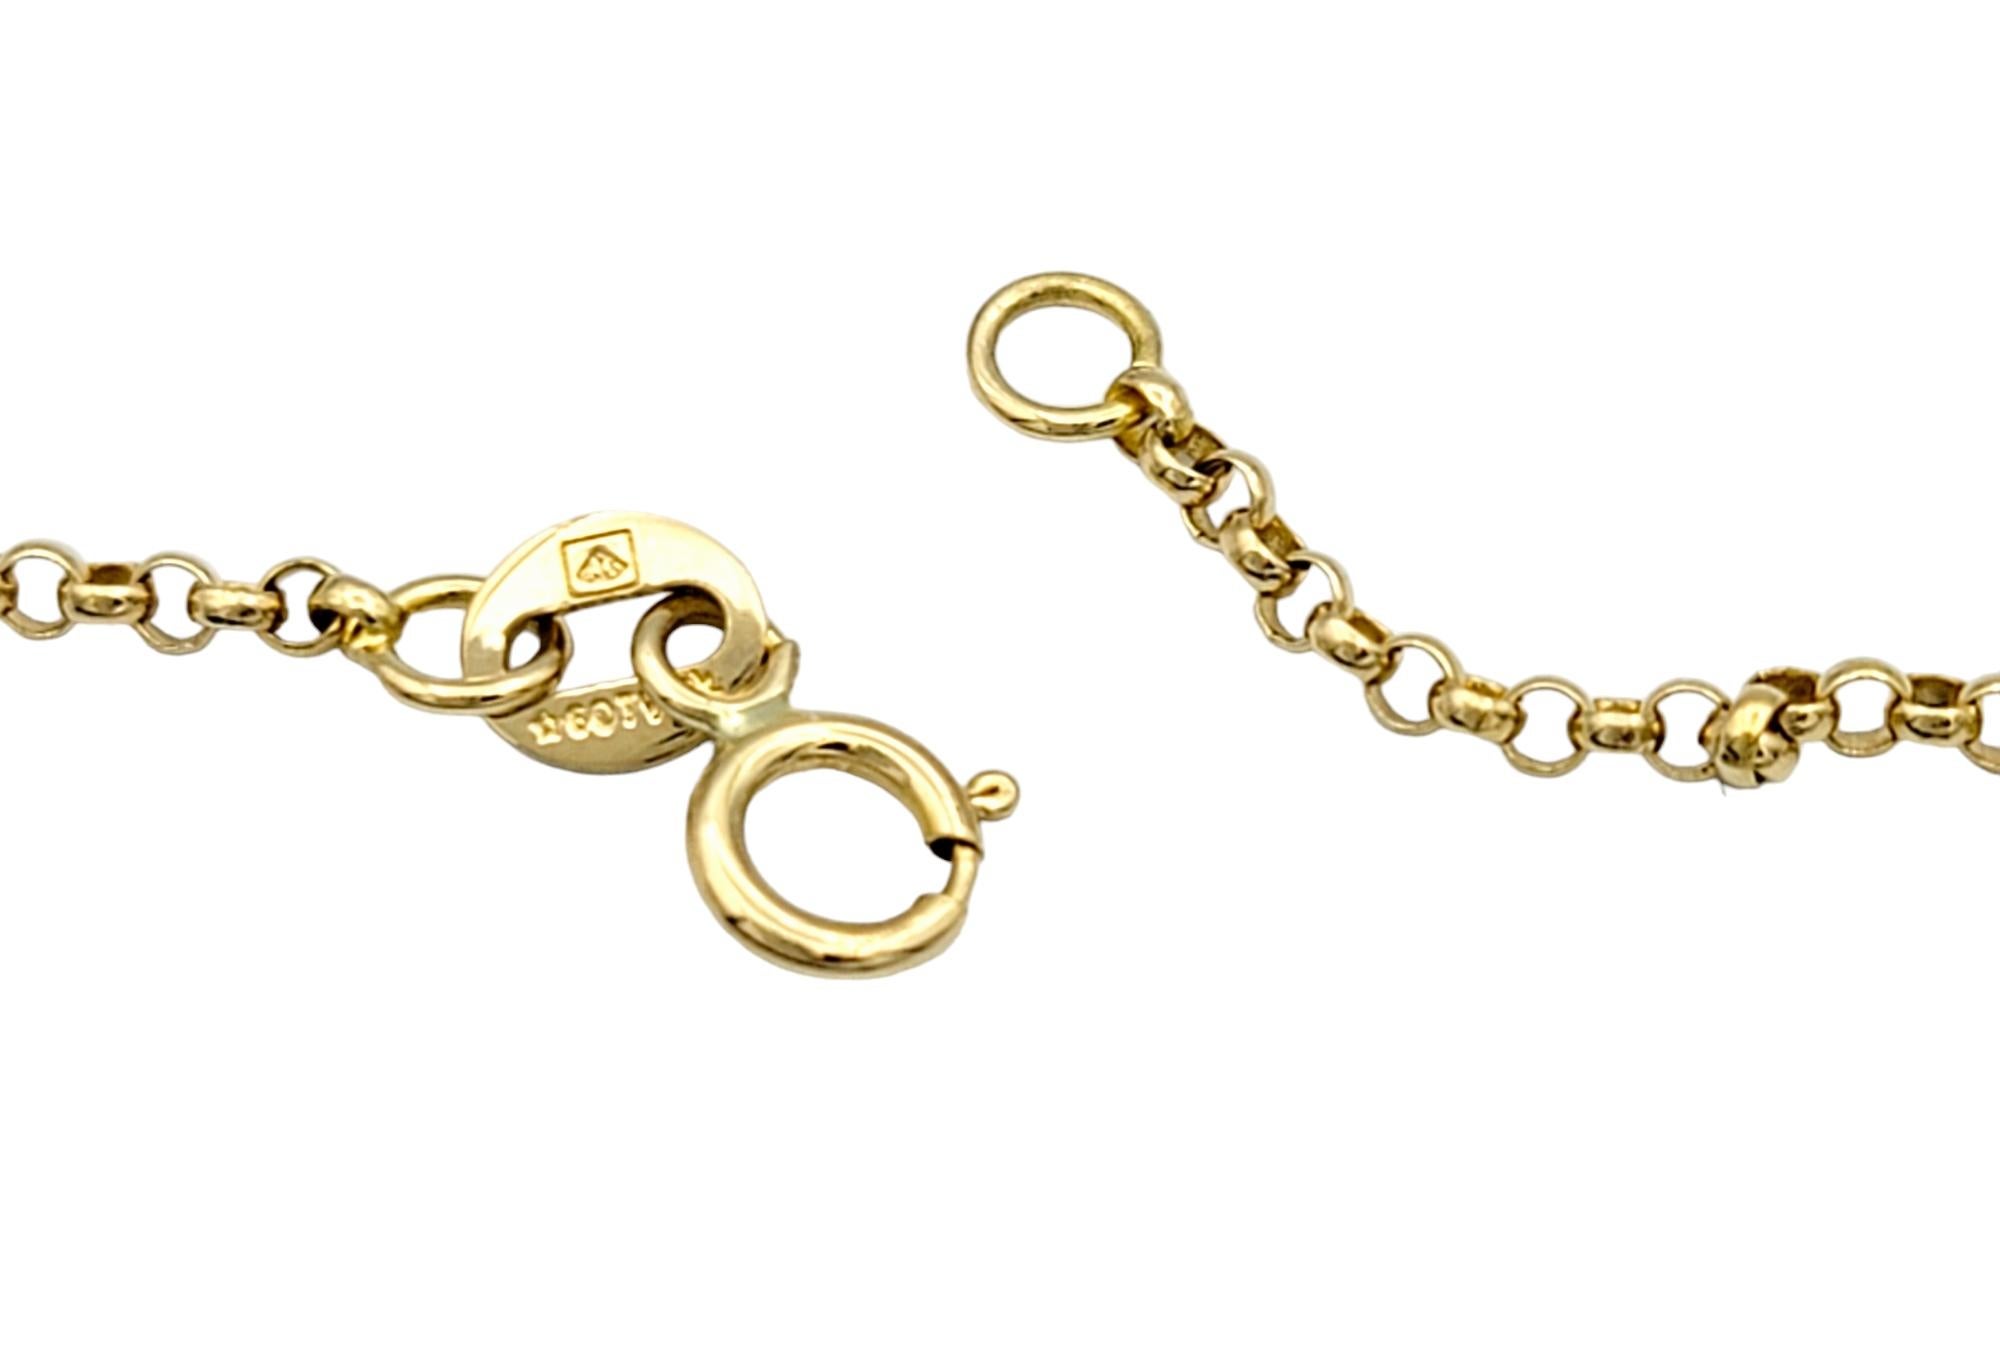 .34 Carat Bezel-Set Round Diamond Solitaire Pendant Necklace in 18 Karat Gold For Sale 3